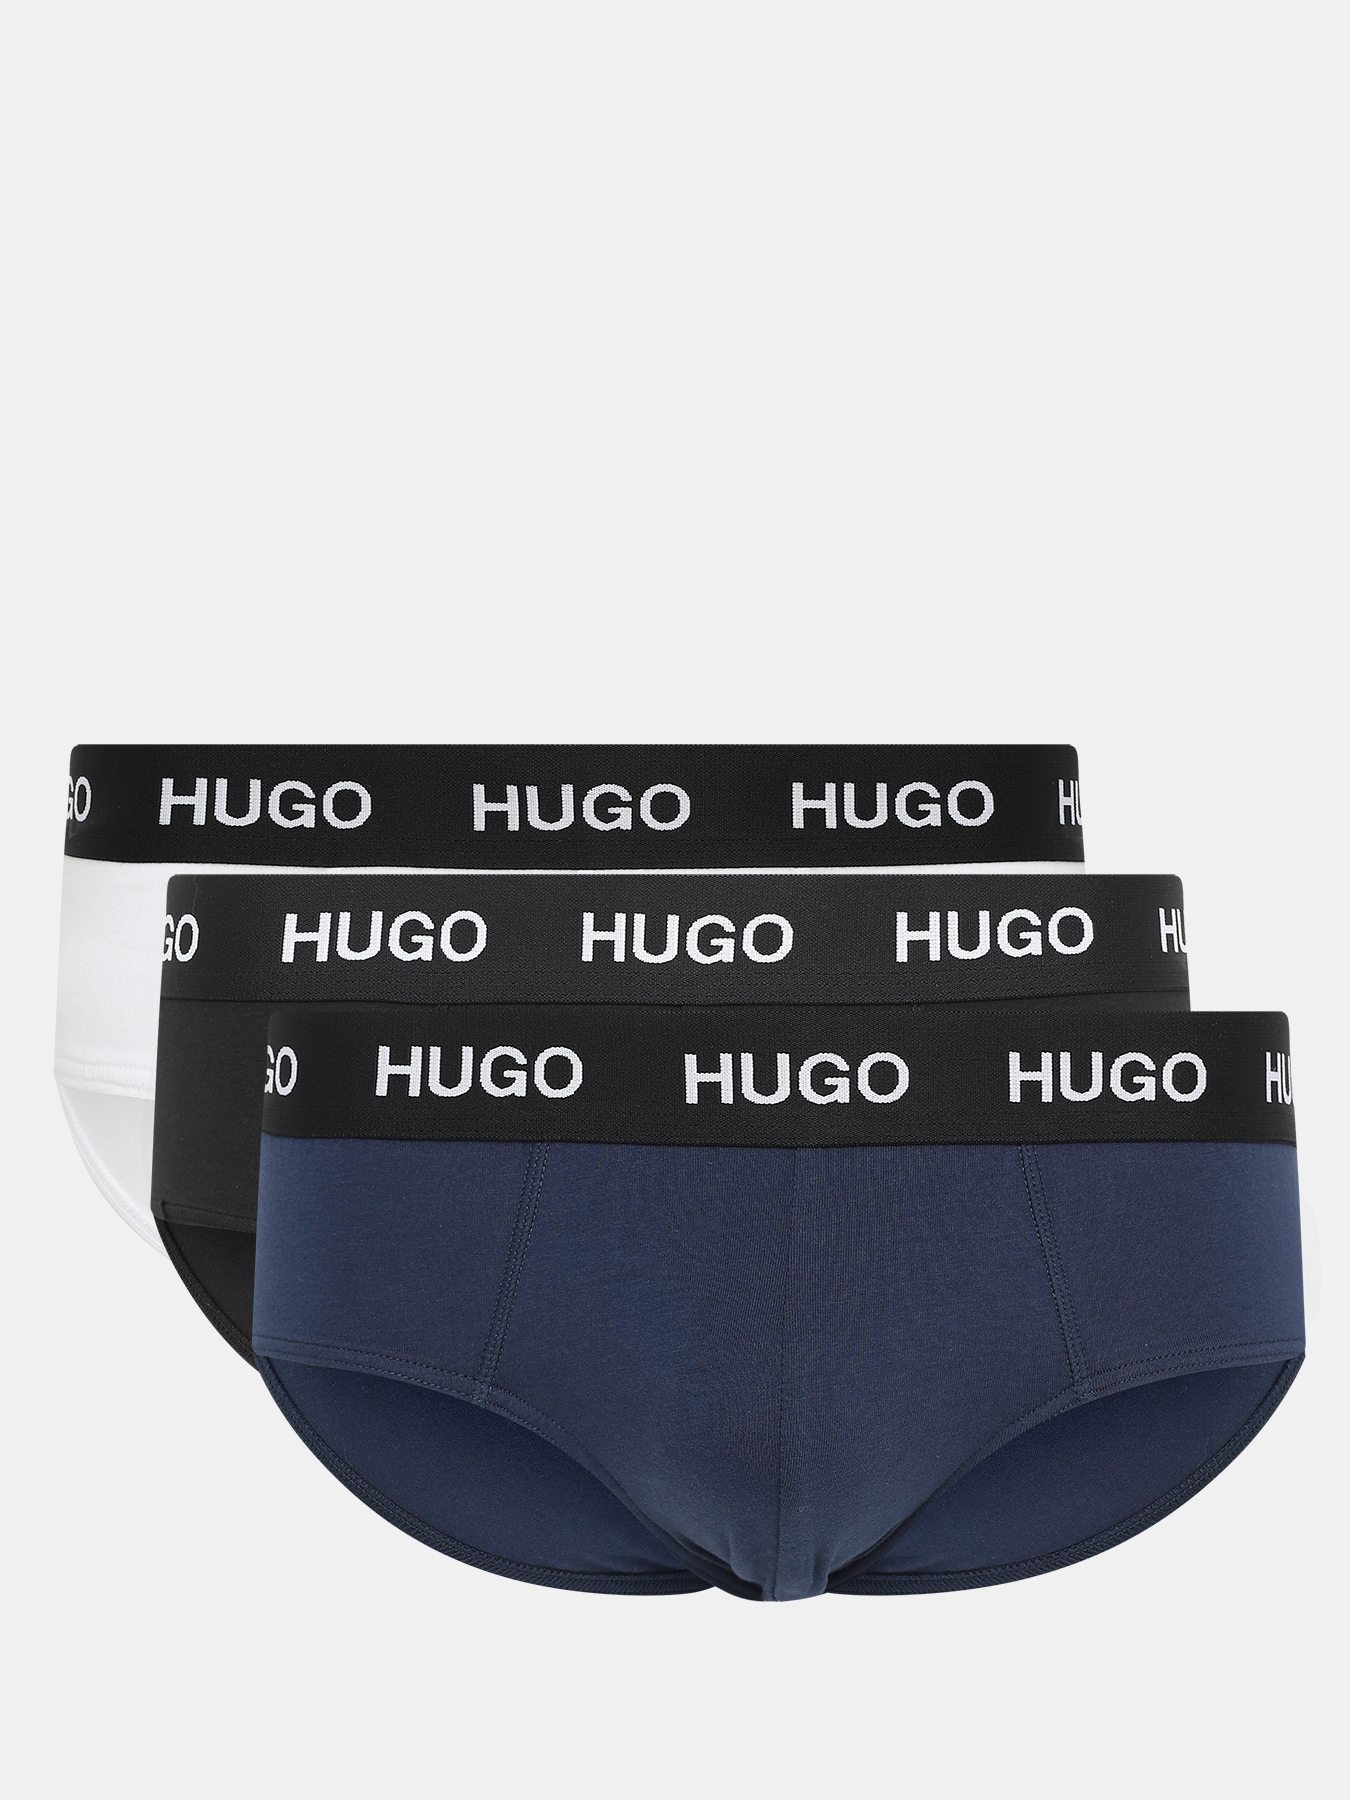 Hugo мужские трусы брифы. Черные брифы Hugo мужские. Hugo размеры